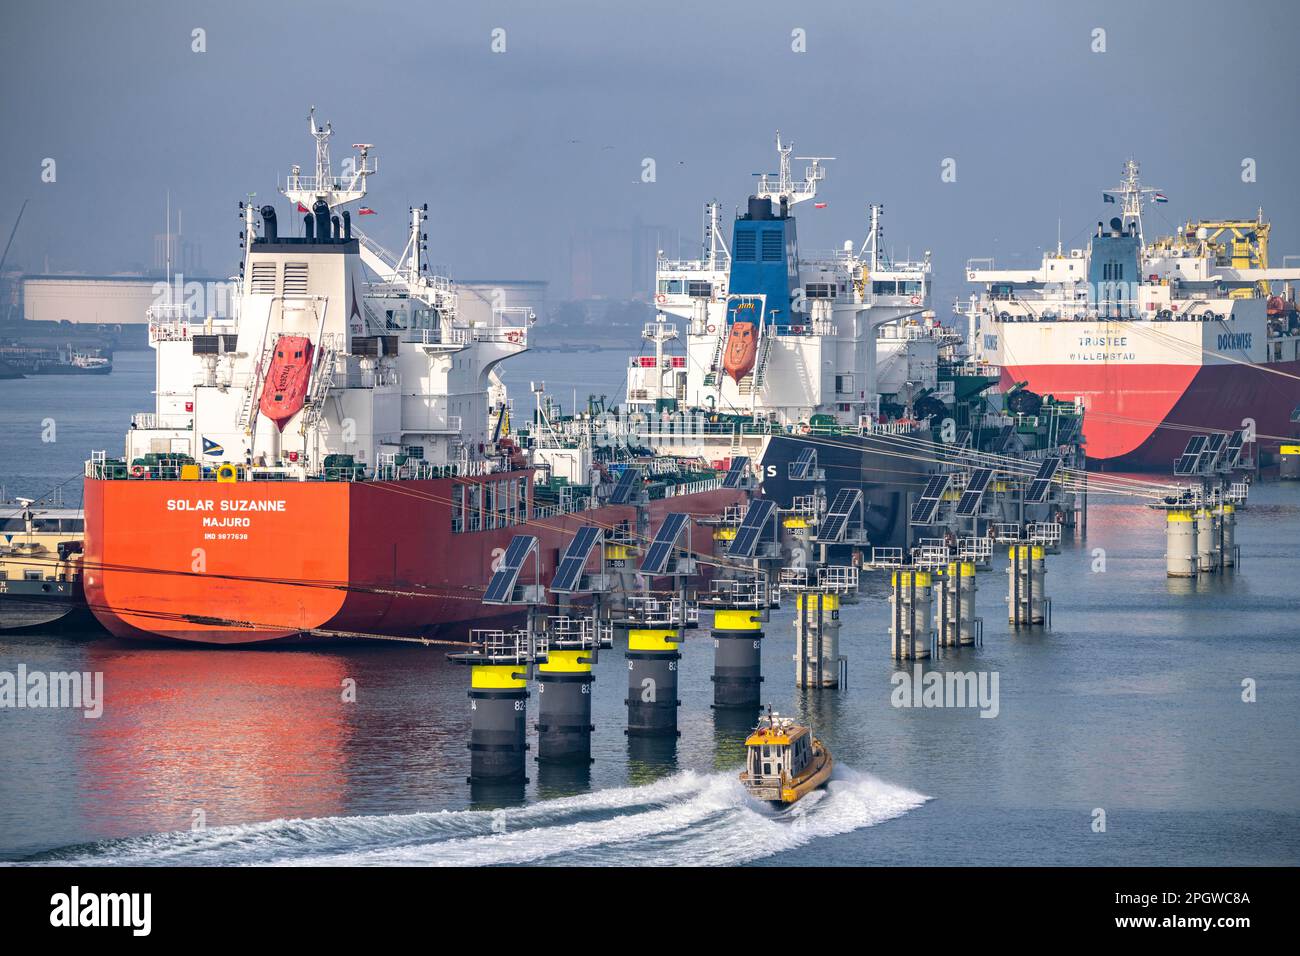 Navi da carico, navi cisterna nel porto marittimo di Rotterdam, nel Petroleumhaven, Europoort, ON, Rotterdam, Paesi Bassi, Foto Stock